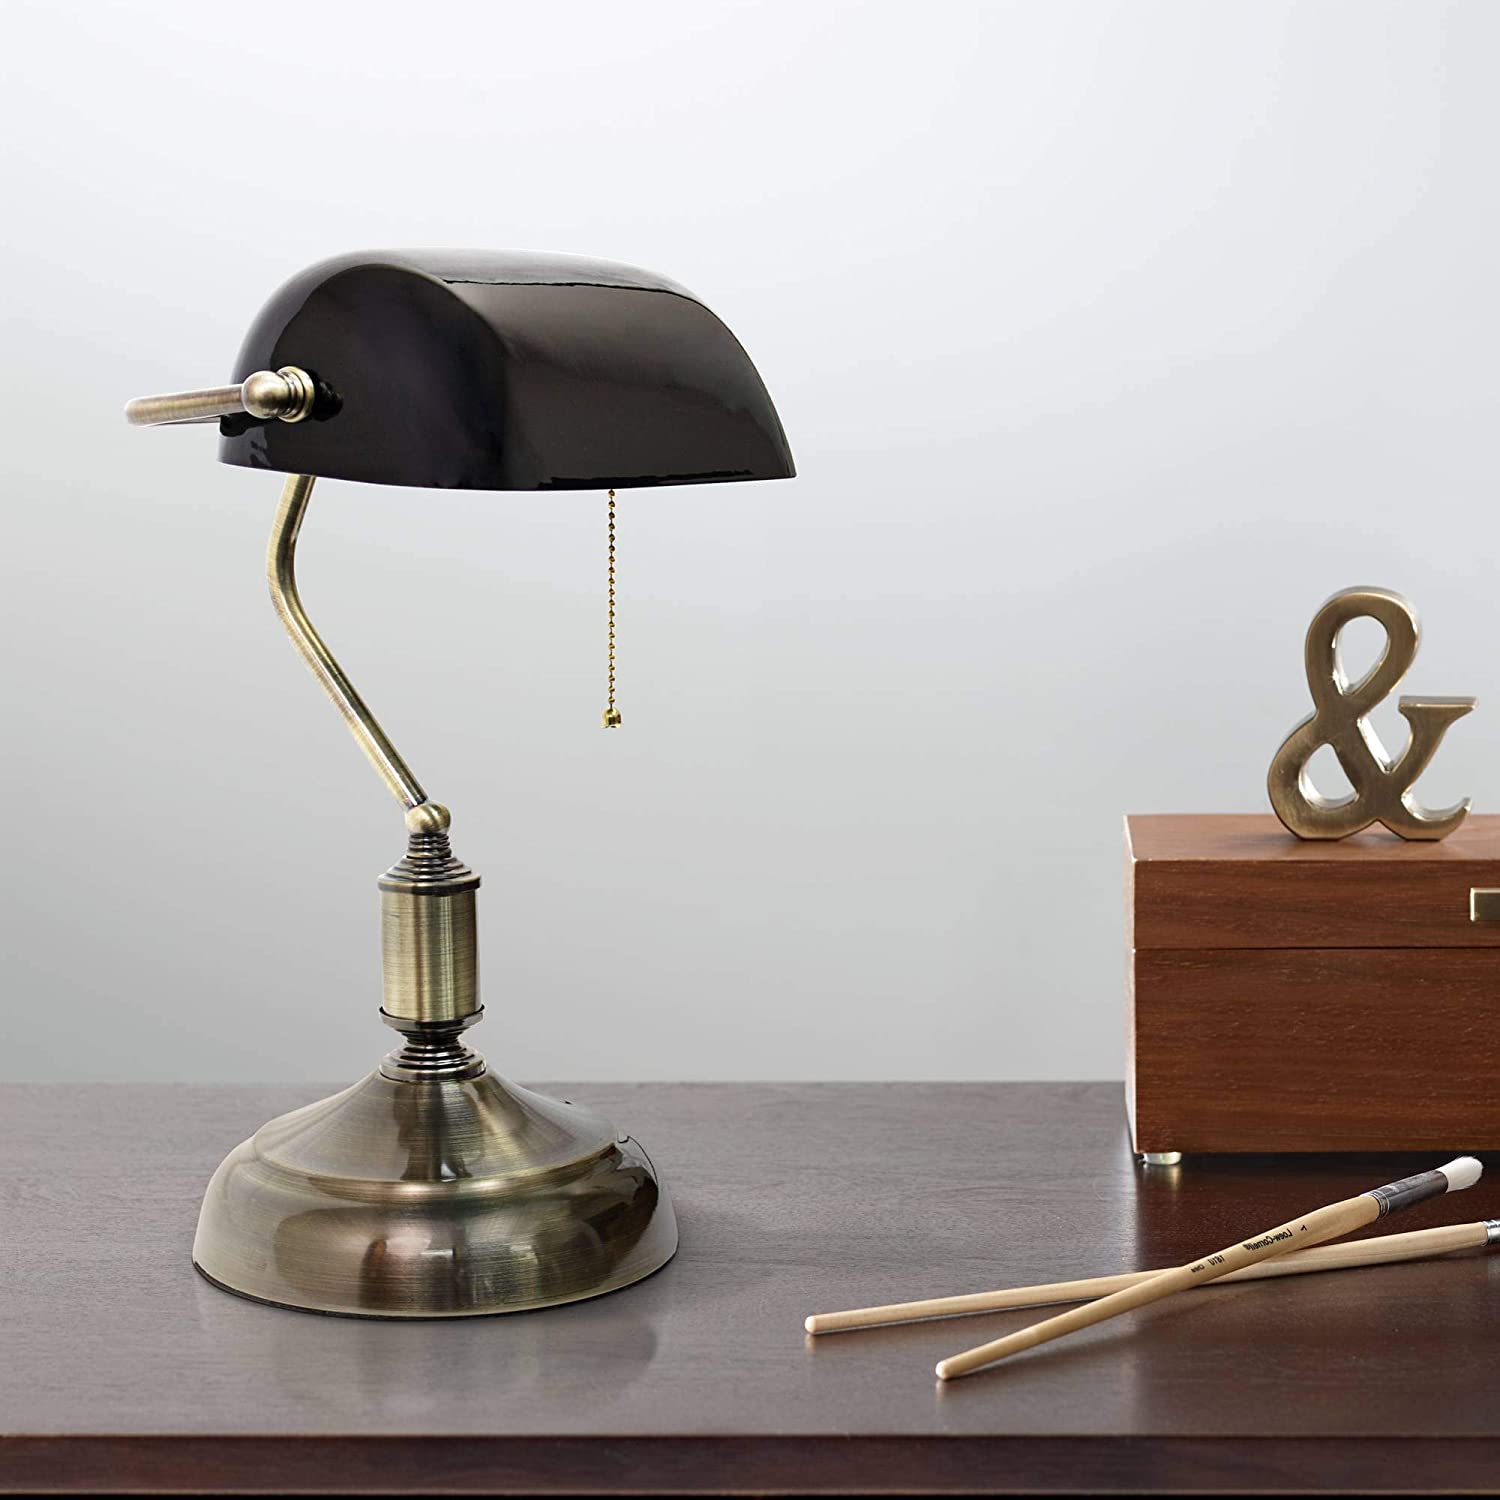 Simple Designs LT3216-BLK Executive Banker's Glass Shade, Desk Lamp, Antique Nickel/Black